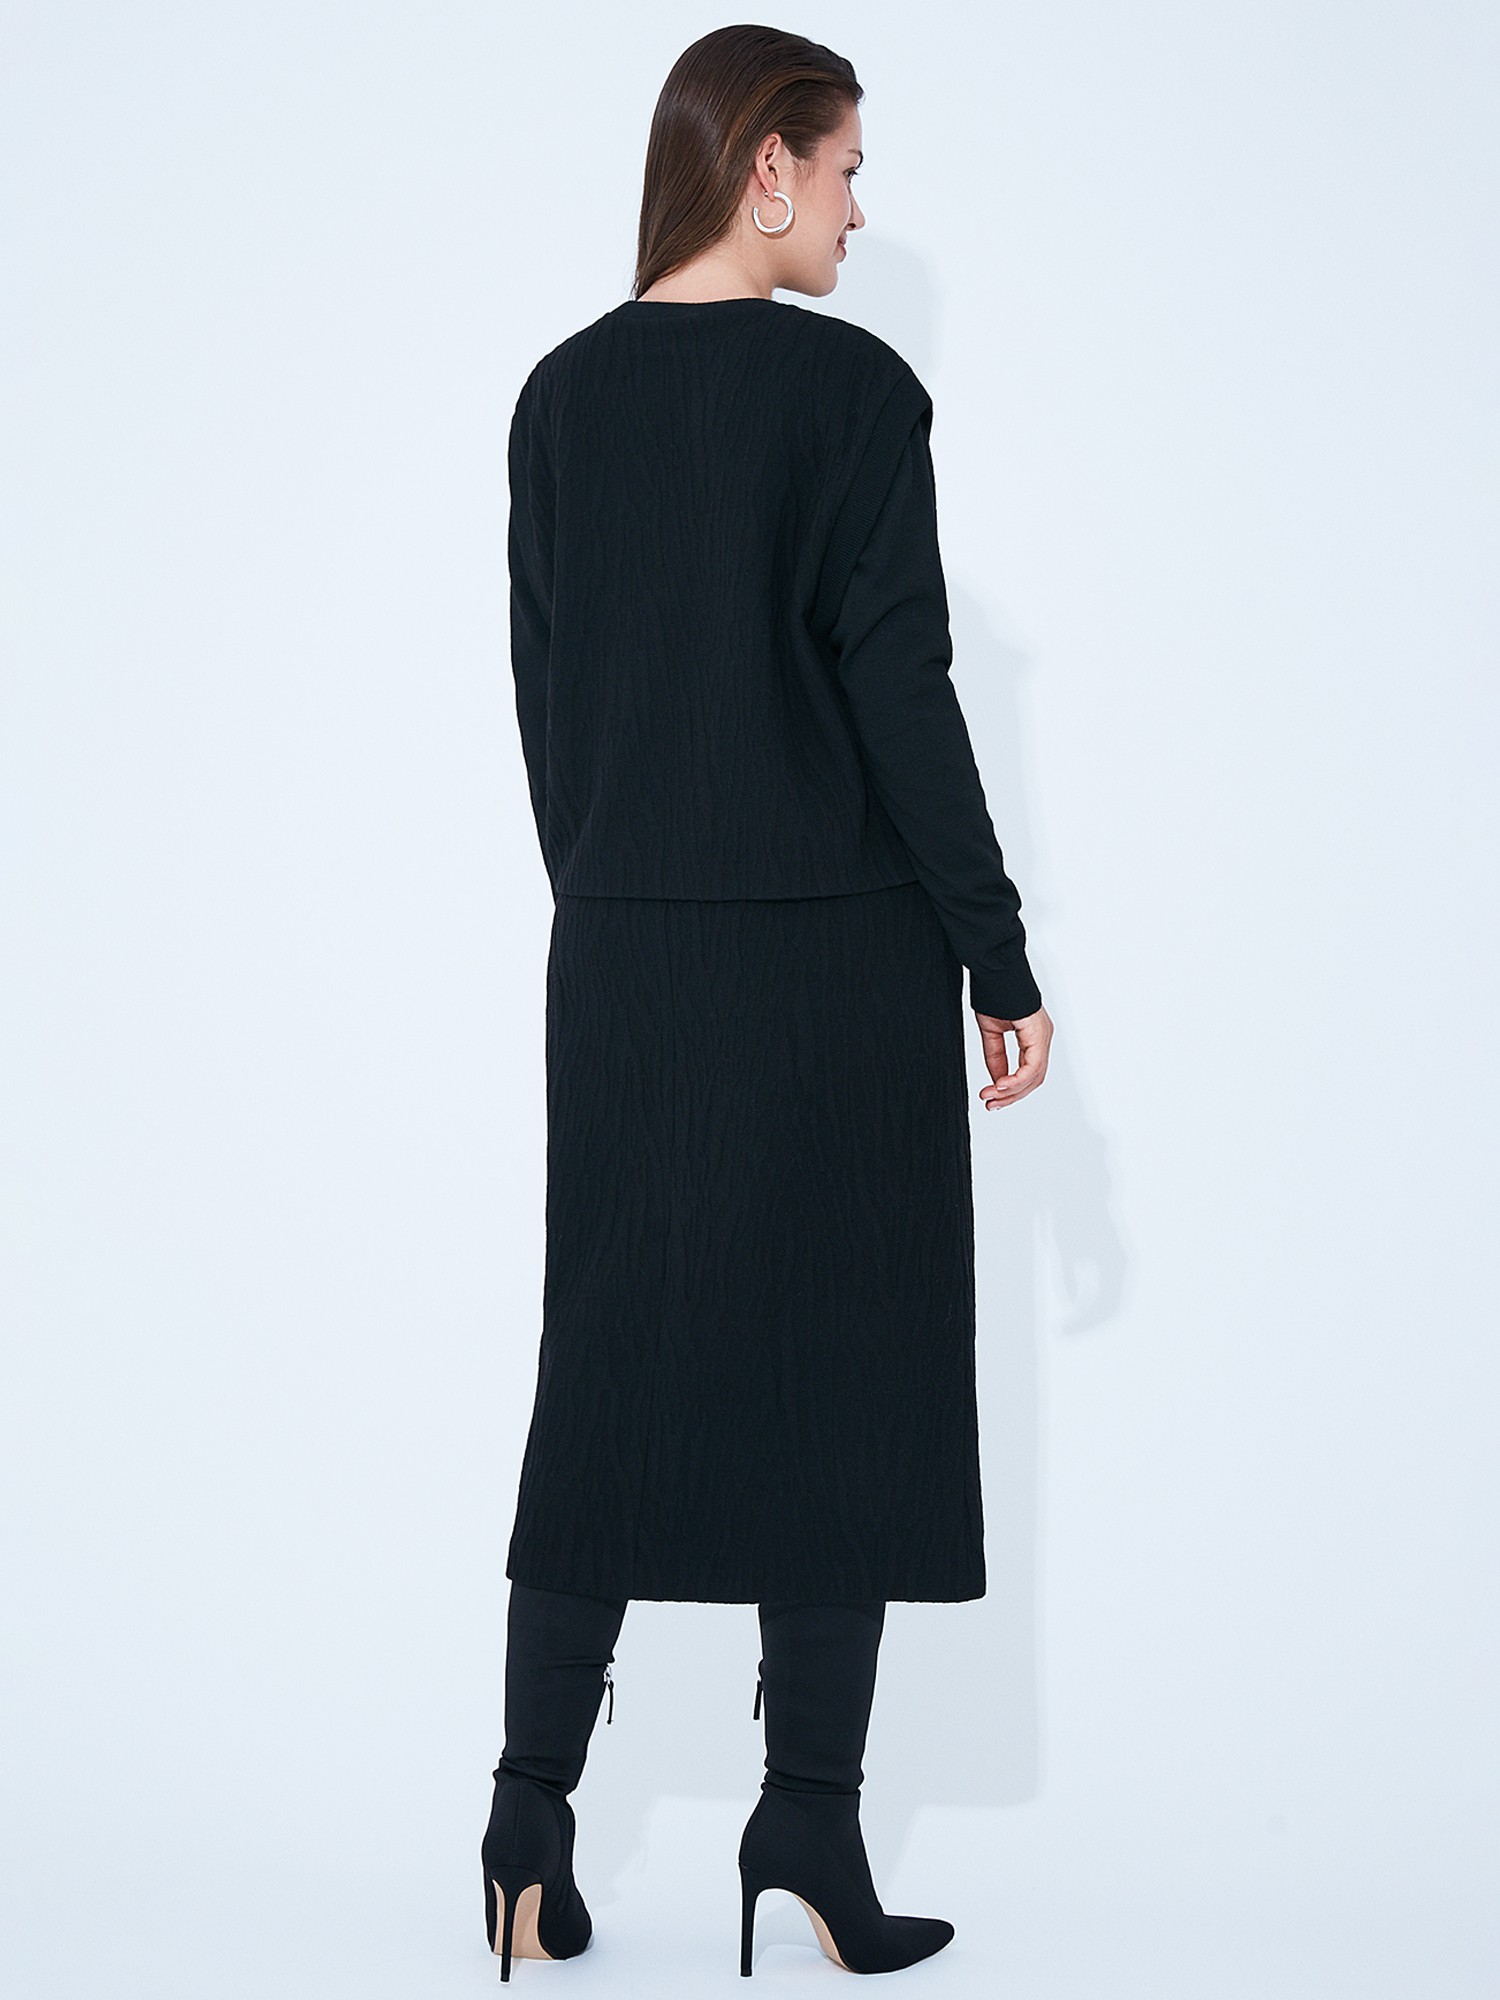 Чёрная трикотажная юбка Lalis SK0139K - фото 4